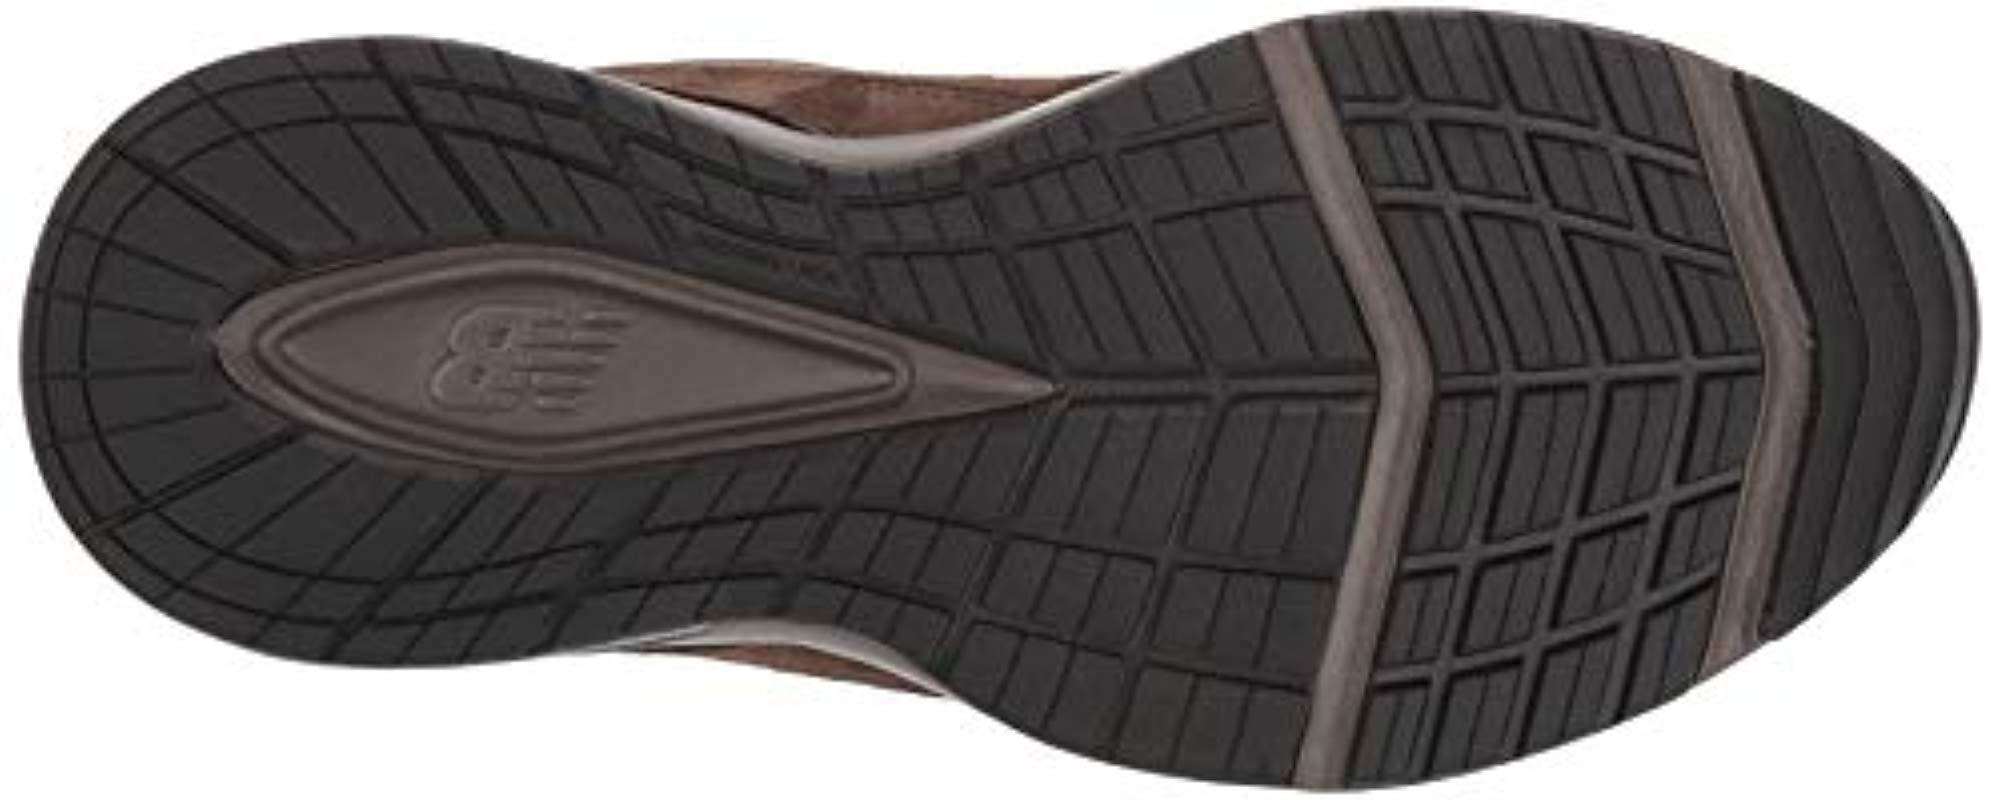 New Balance 608v5 Casual Comfort Walking Shoe, Chocolate Brown/white ...